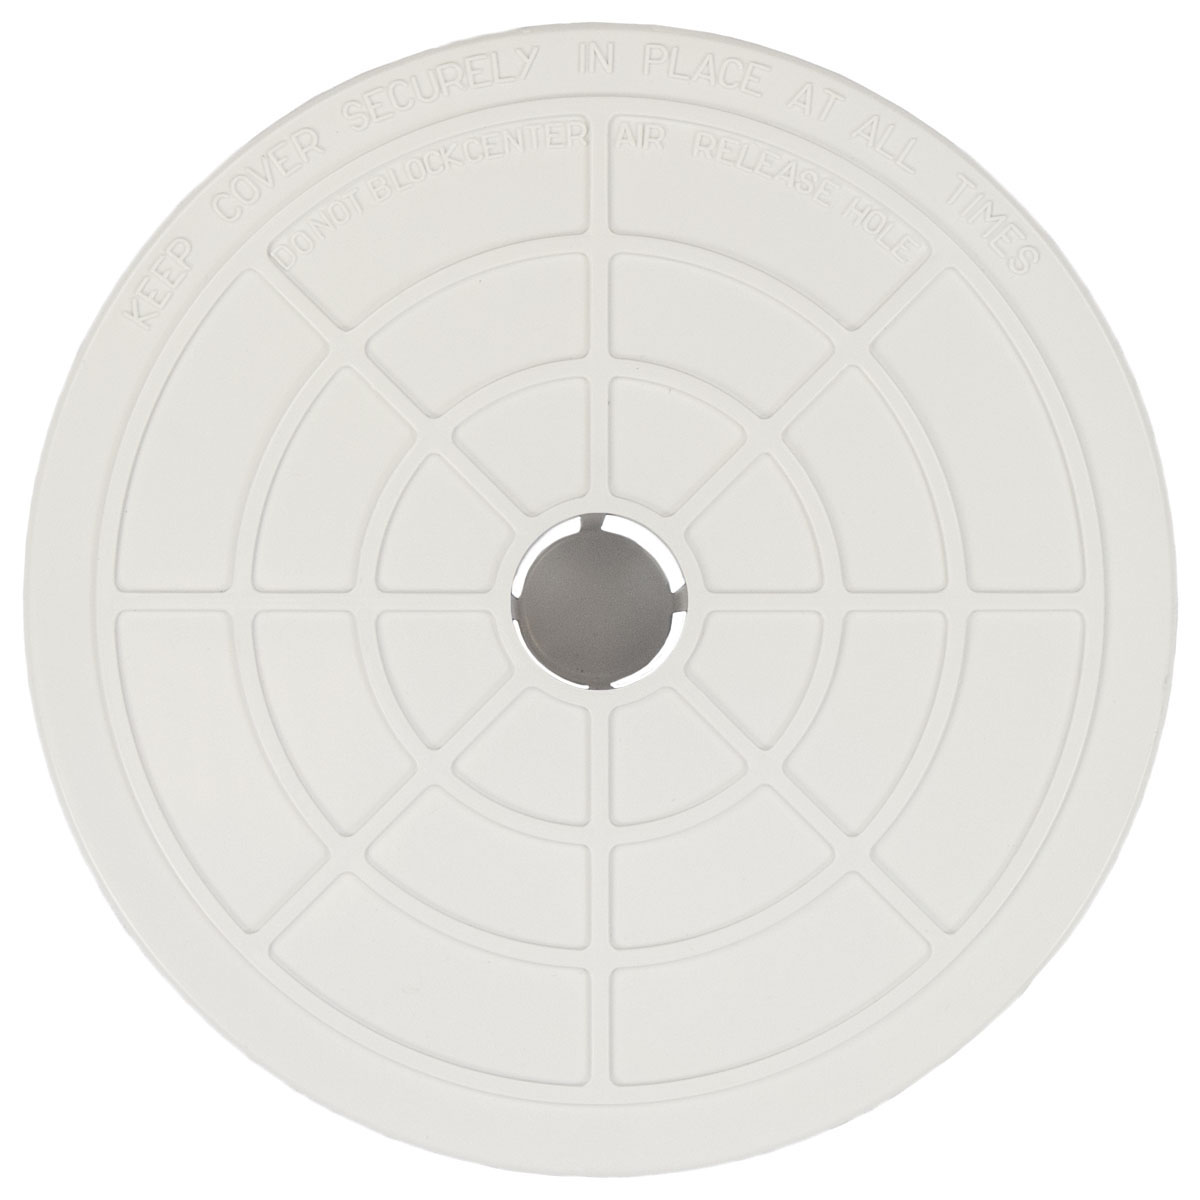 Hayward skimmerdeksel (diameter 150 mm)